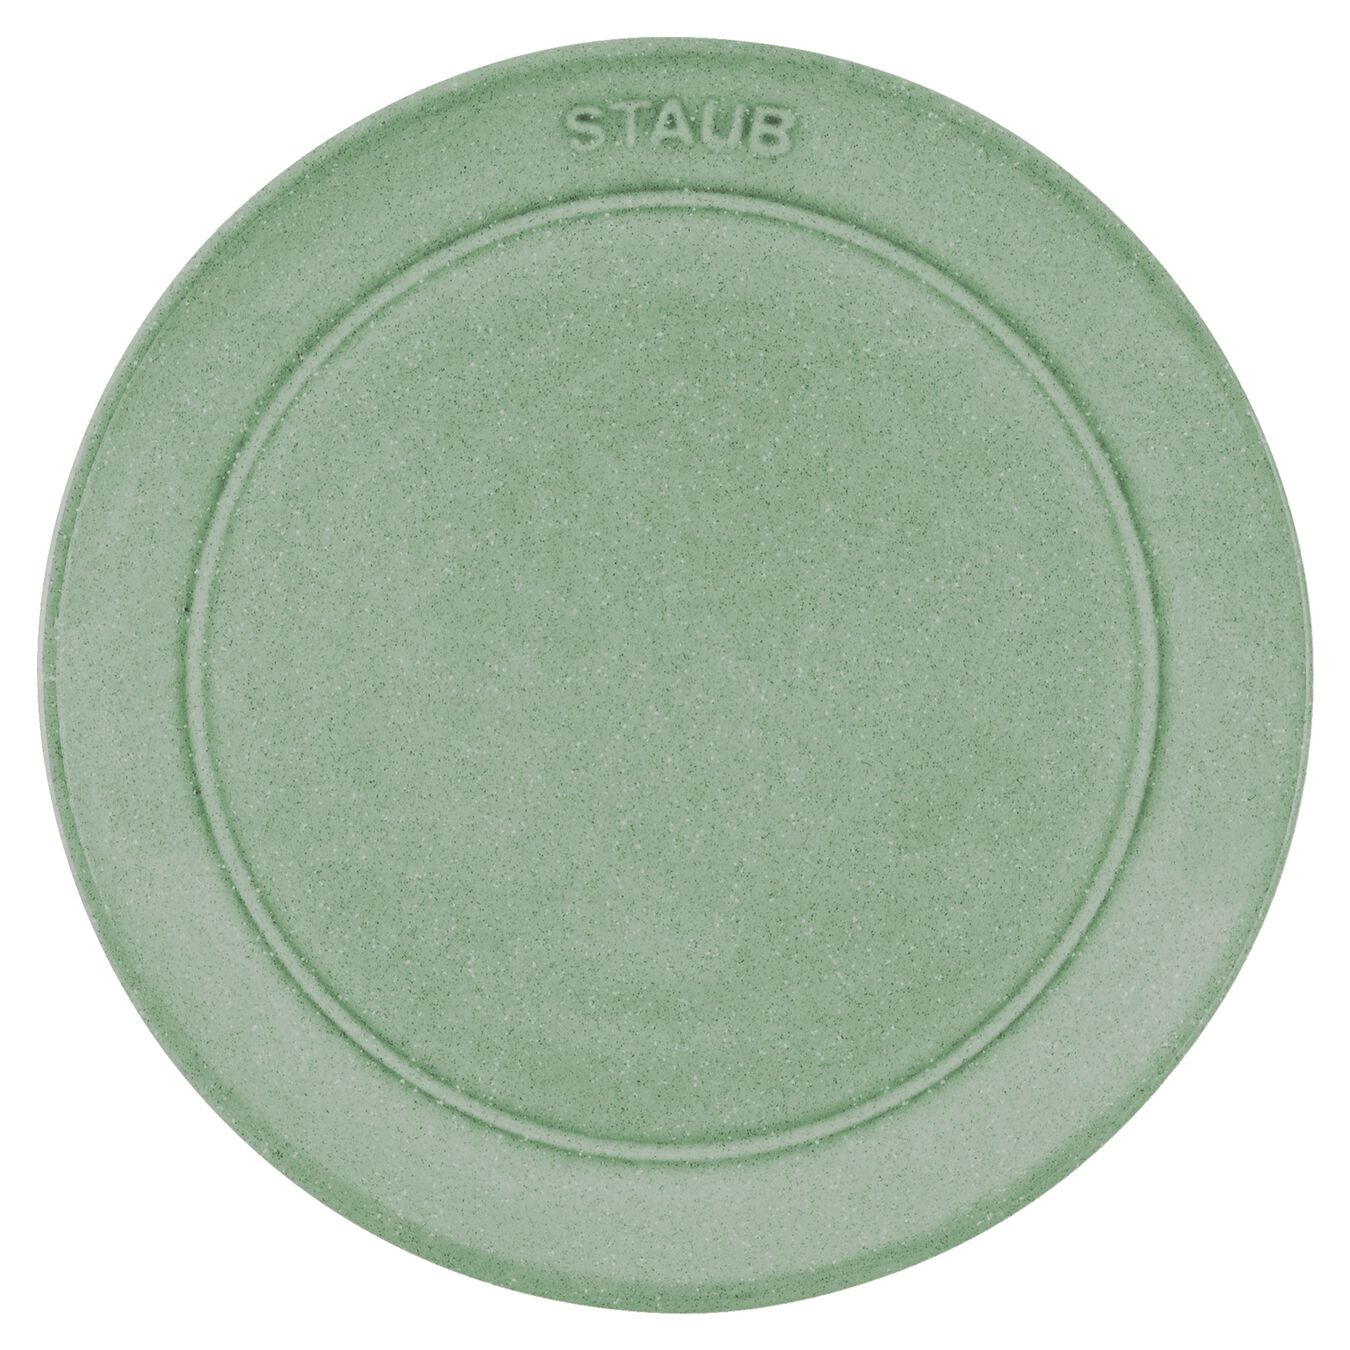 Prato plano 15 cm, Cerâmica, Verde seco,,large 2